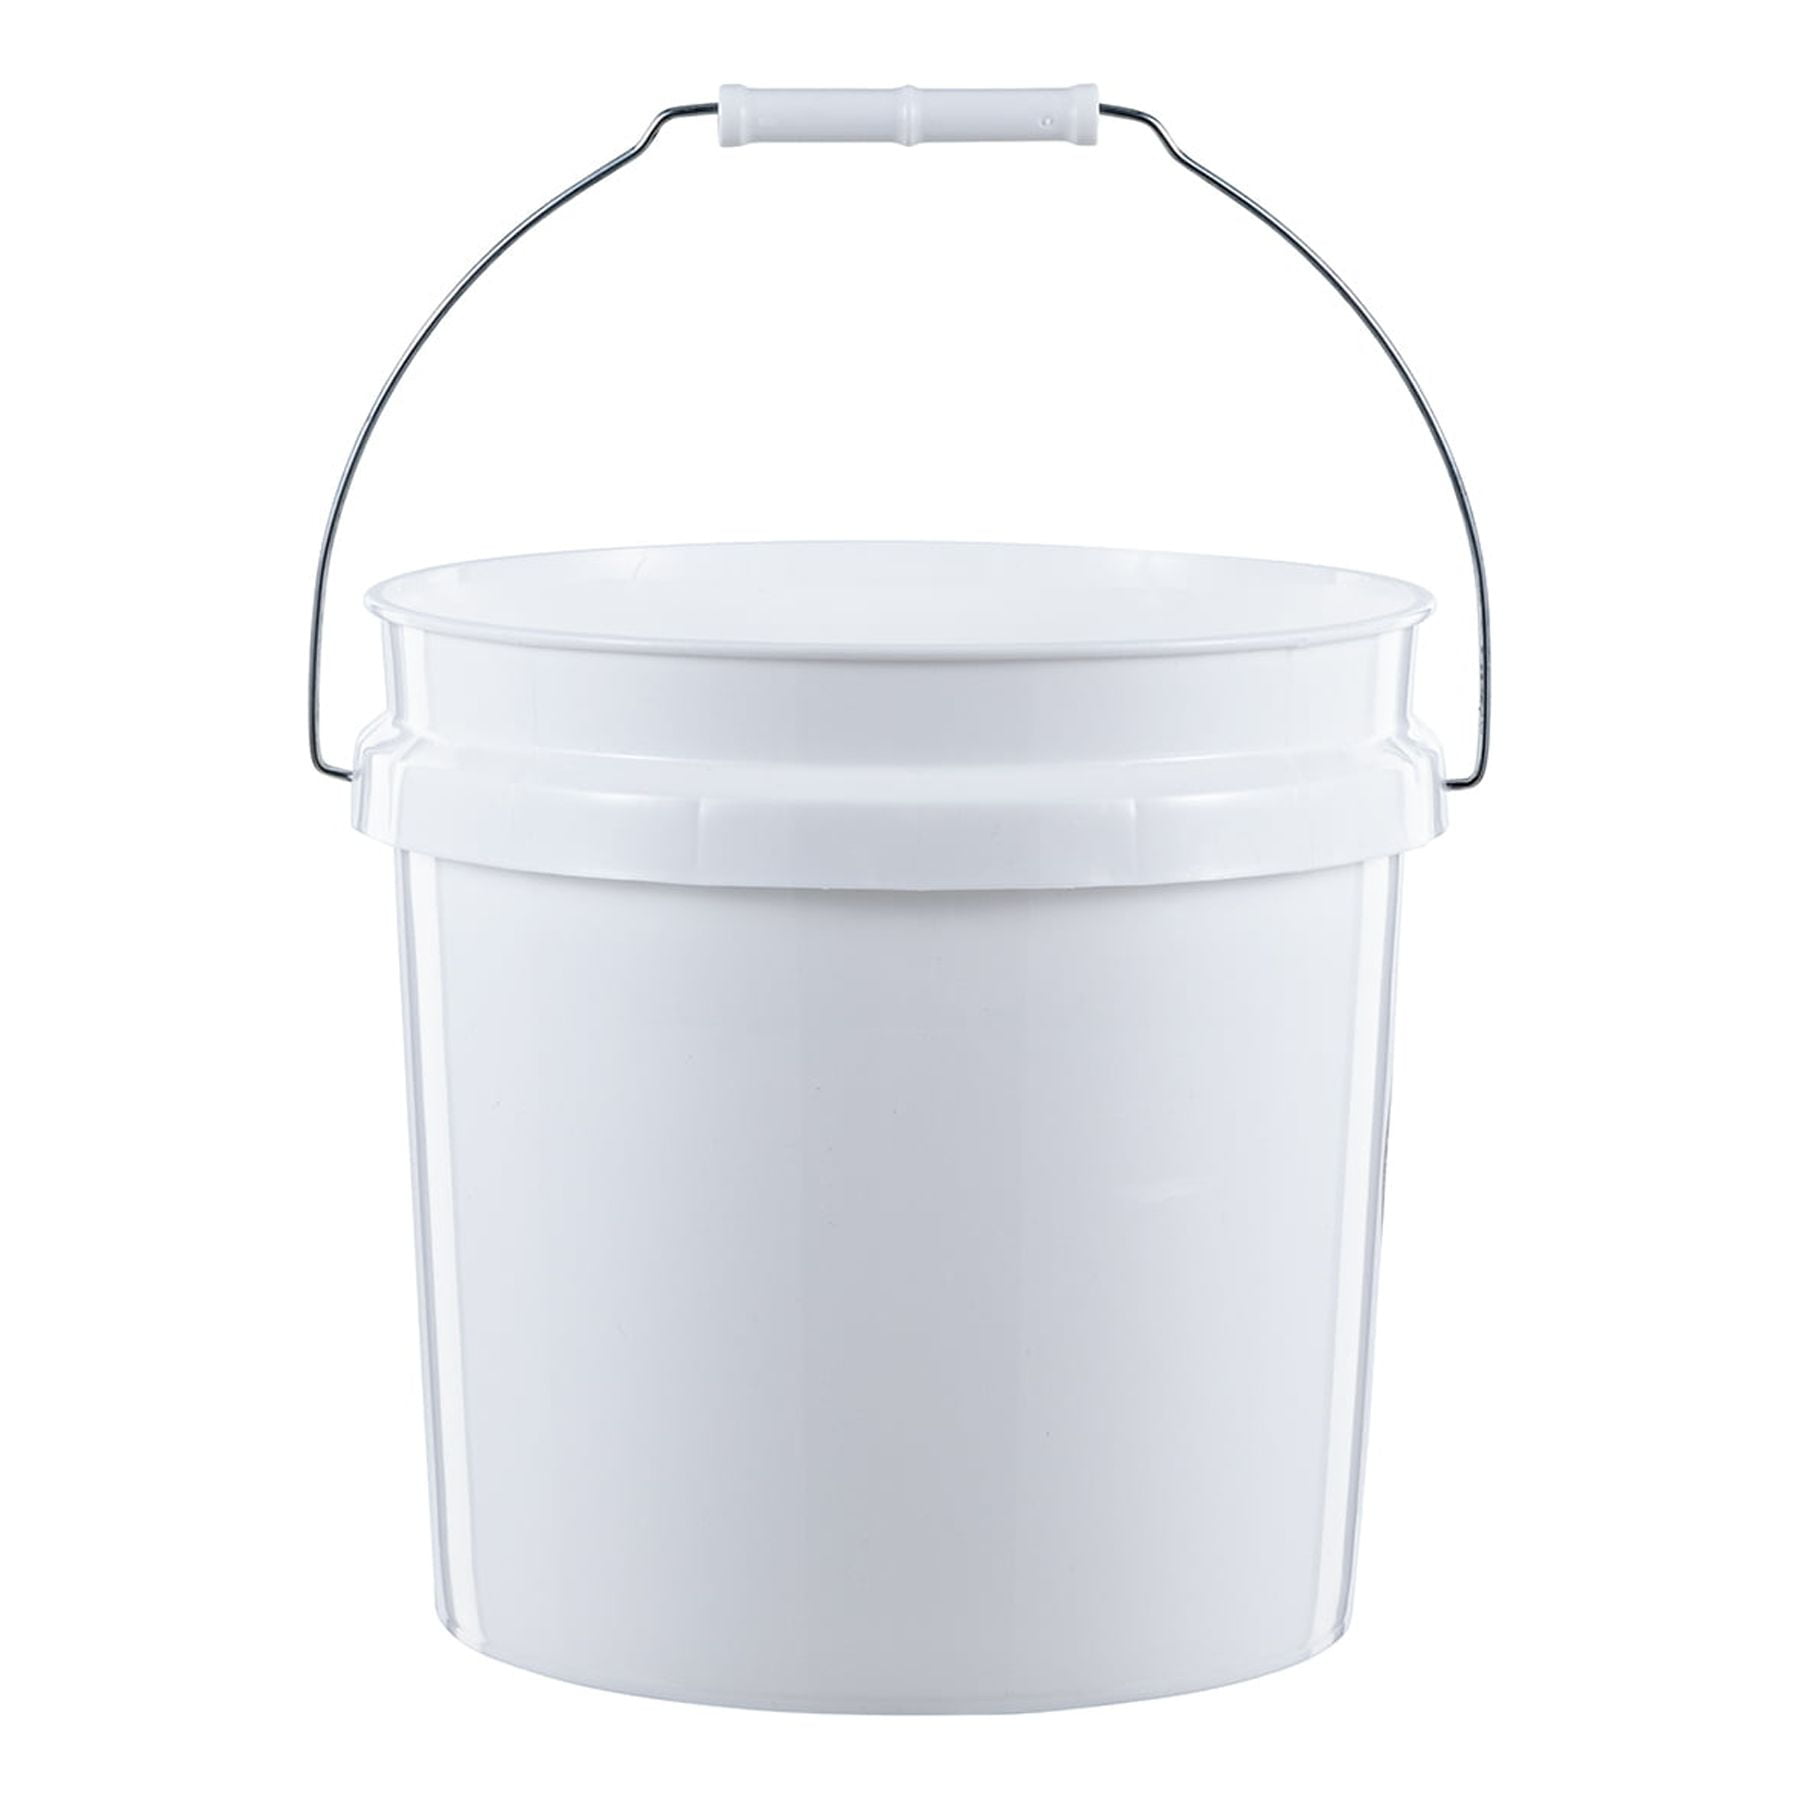 5 Gallon Round Plastic Buckets w/ Wire Handle & Plastic Grip